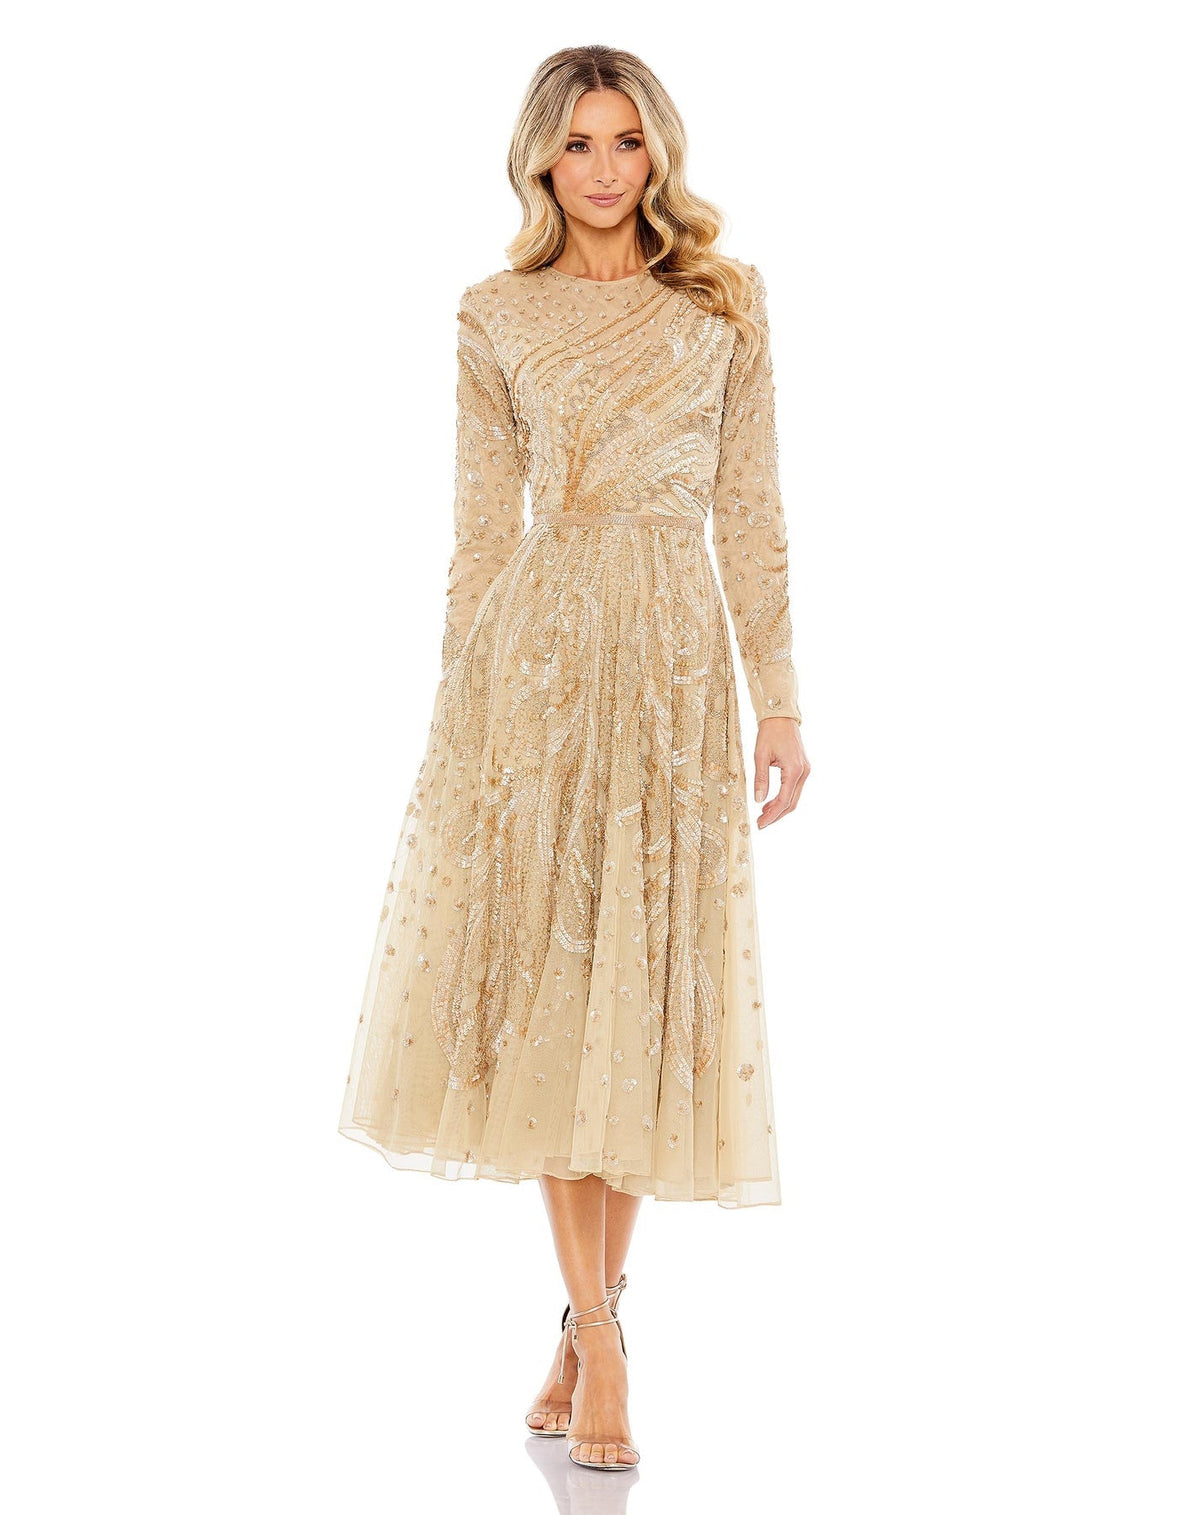 mac duggal, EMBELLISHED ILLUSION HIGH NECK LONG SLEEVE DRESS, modest dress, Style #5572, gold